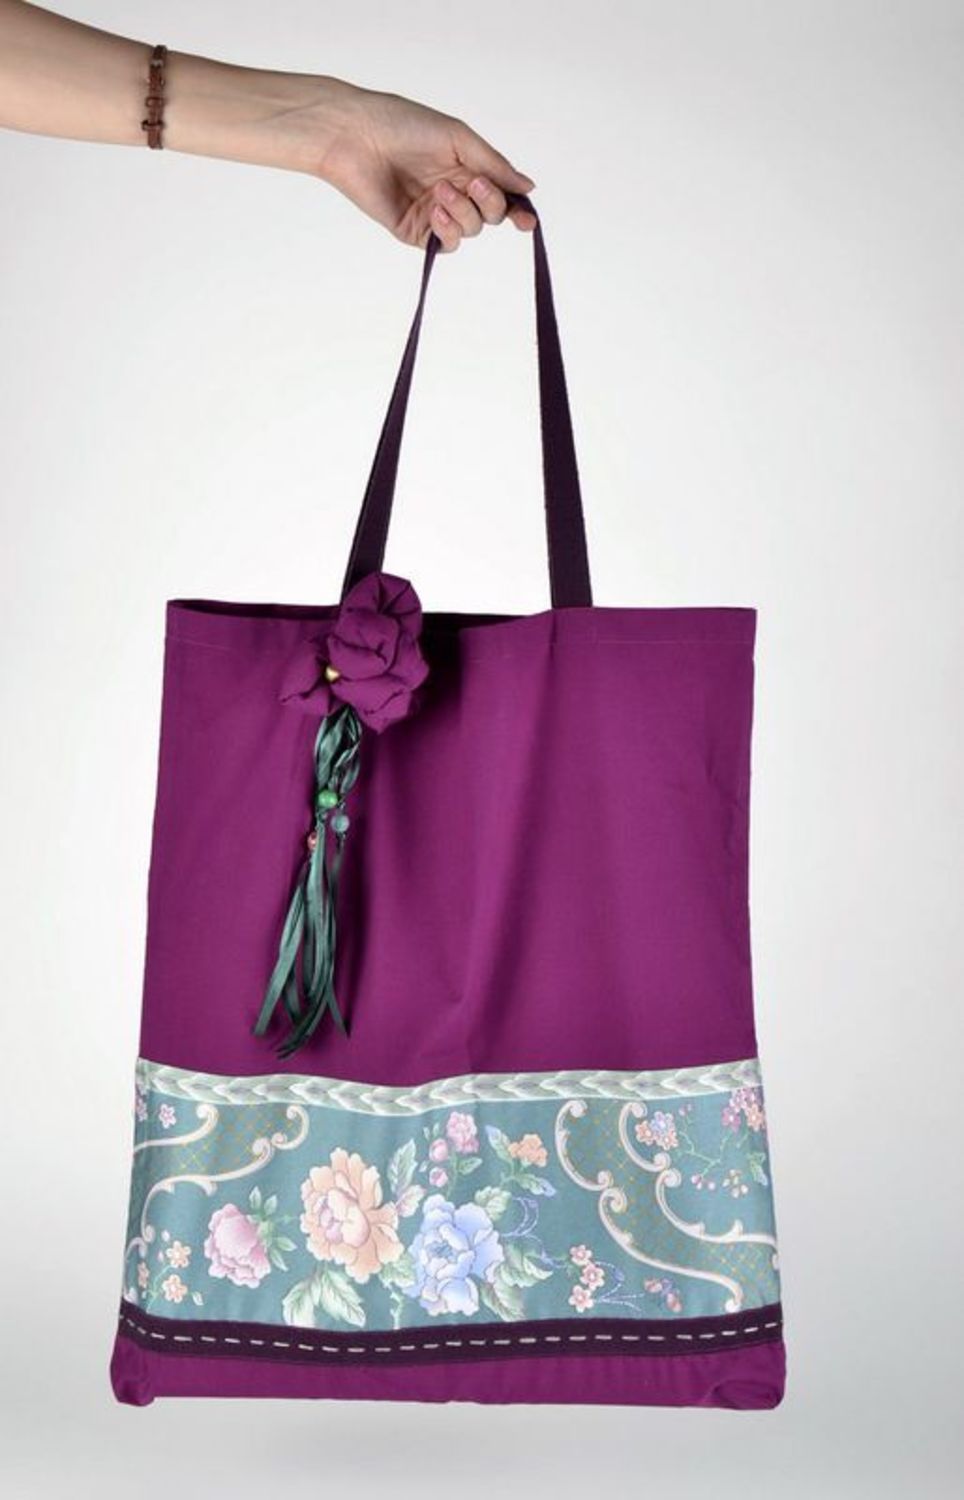 Women's handbag of violet color photo 3